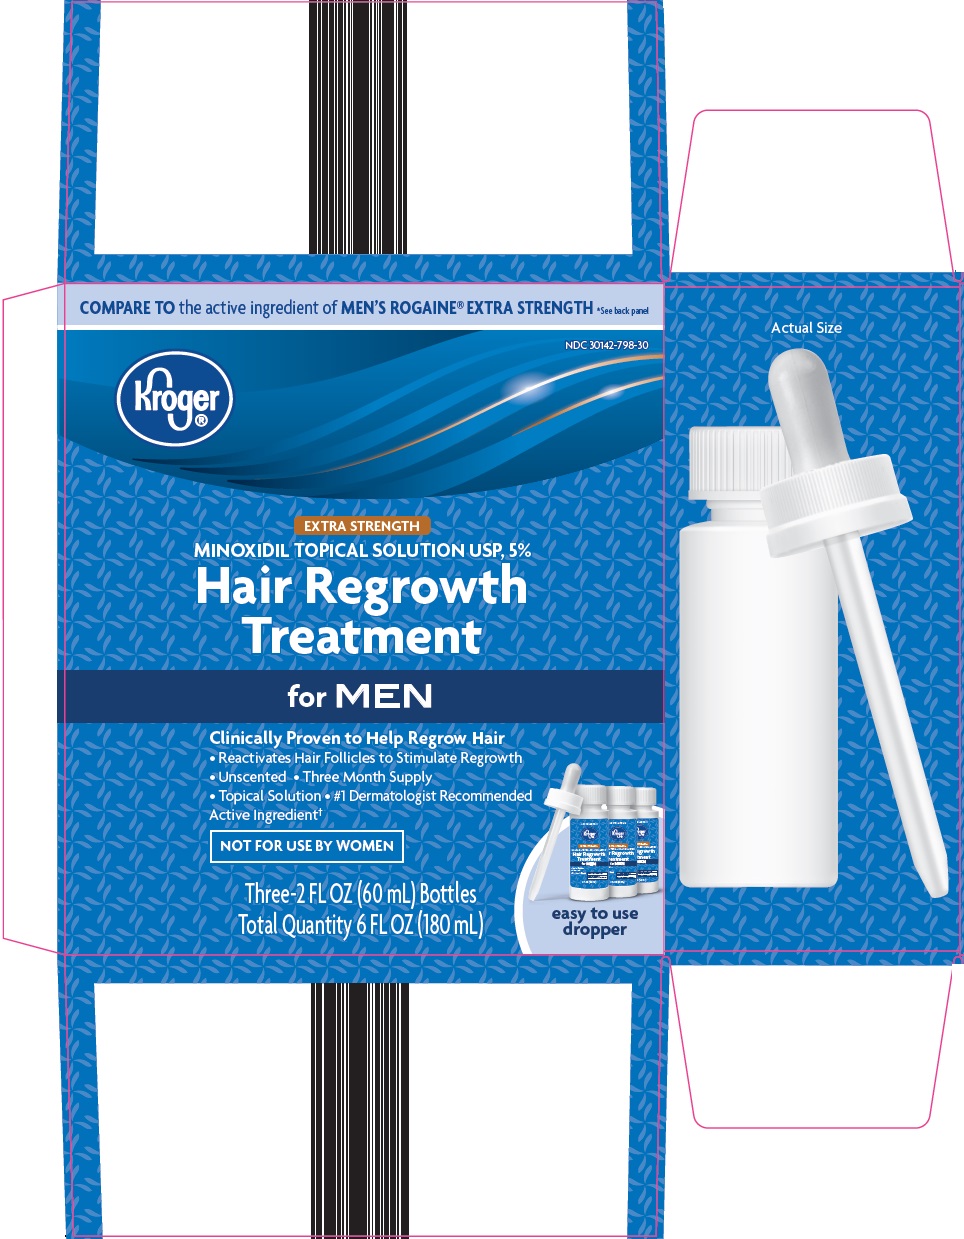 Kroger Hair Regrowth Treatment image 1